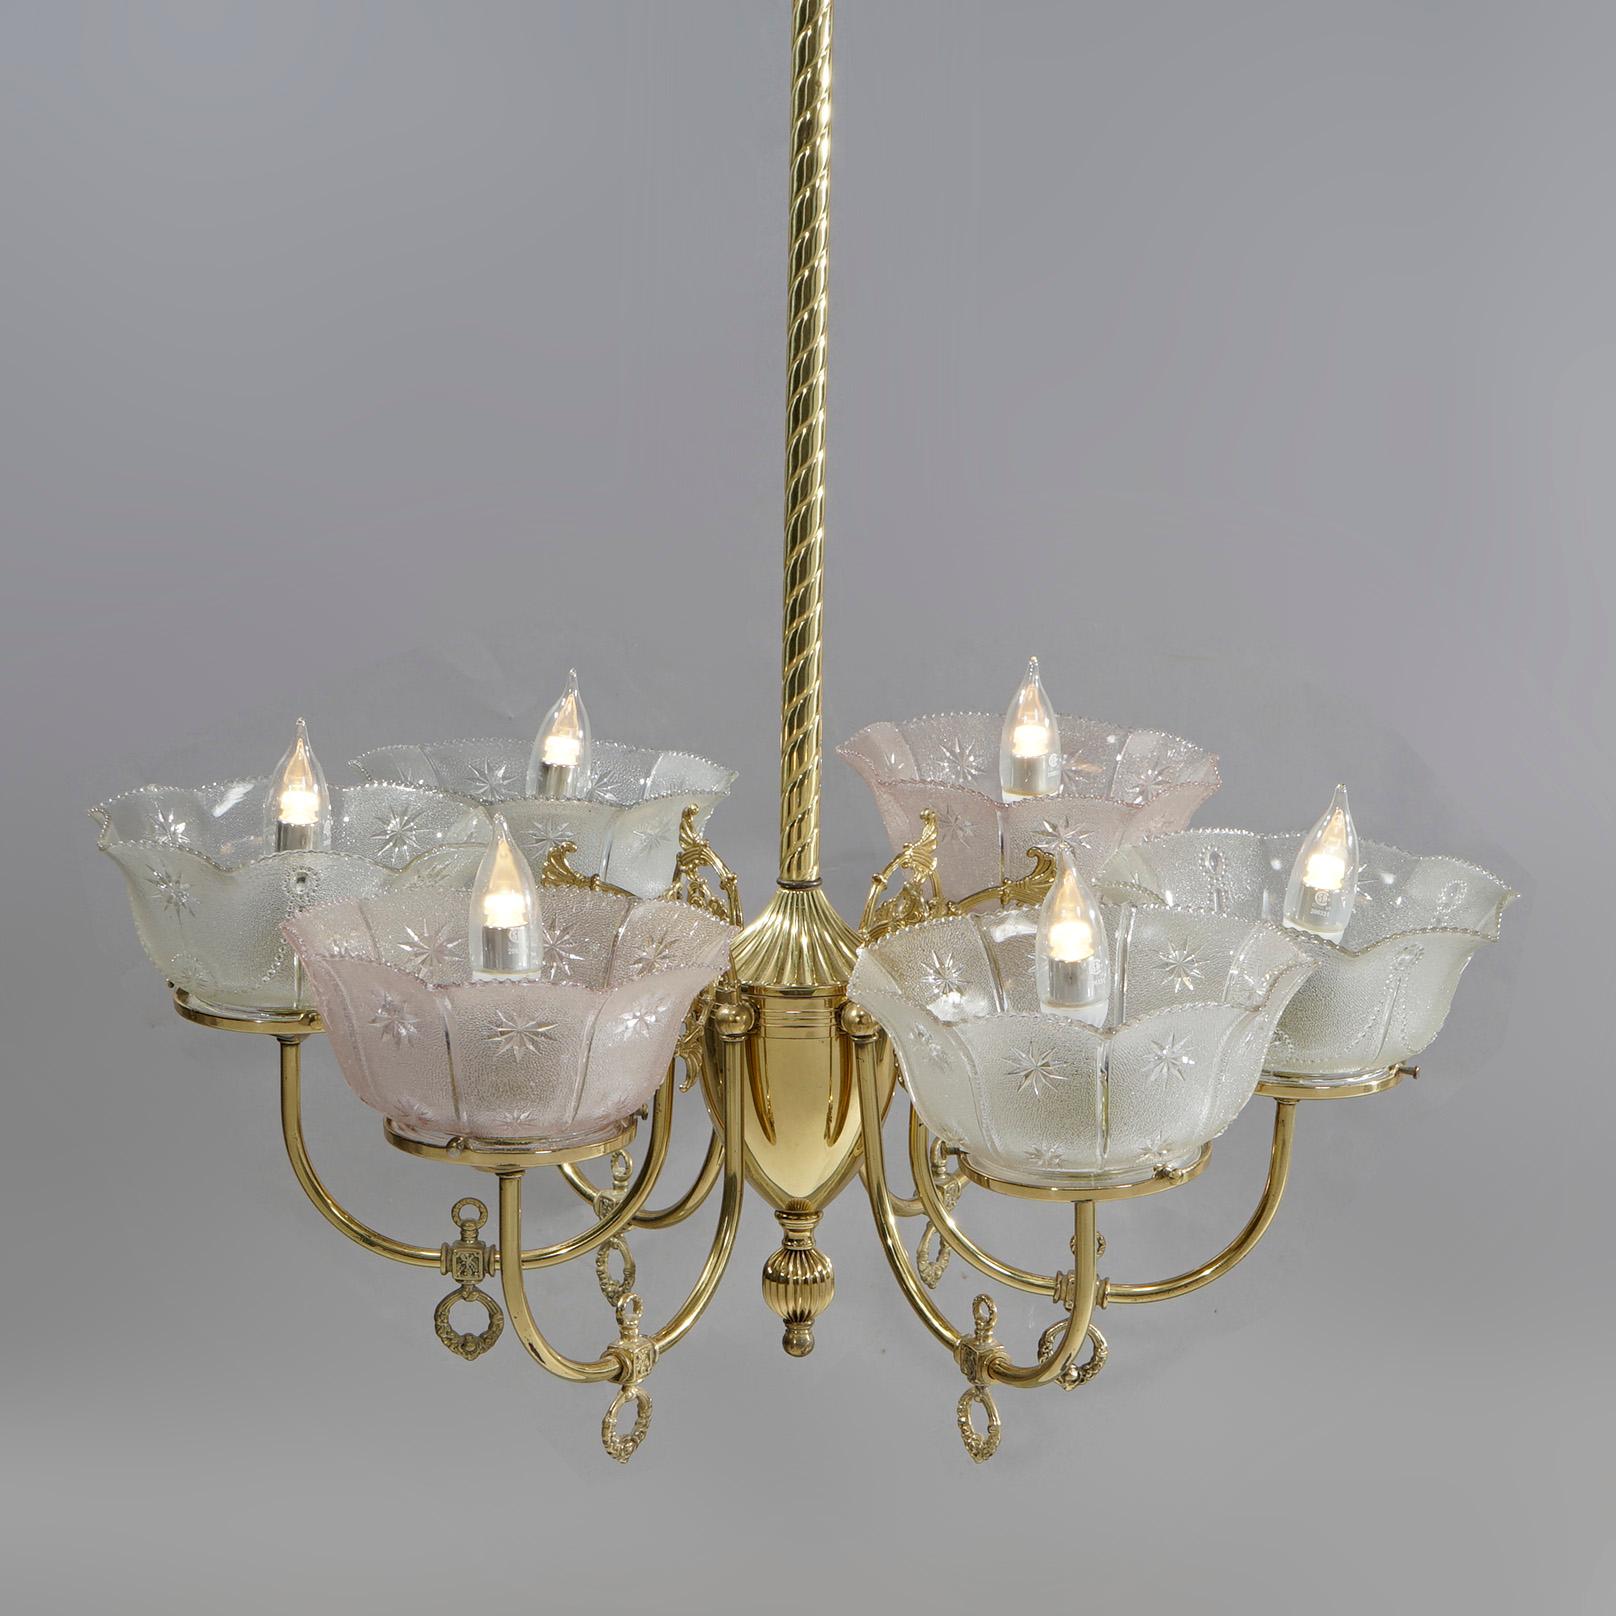 19th Century Antique Victorian Brass & Glass Six-Light Electrified Gas Chandelier, c1890